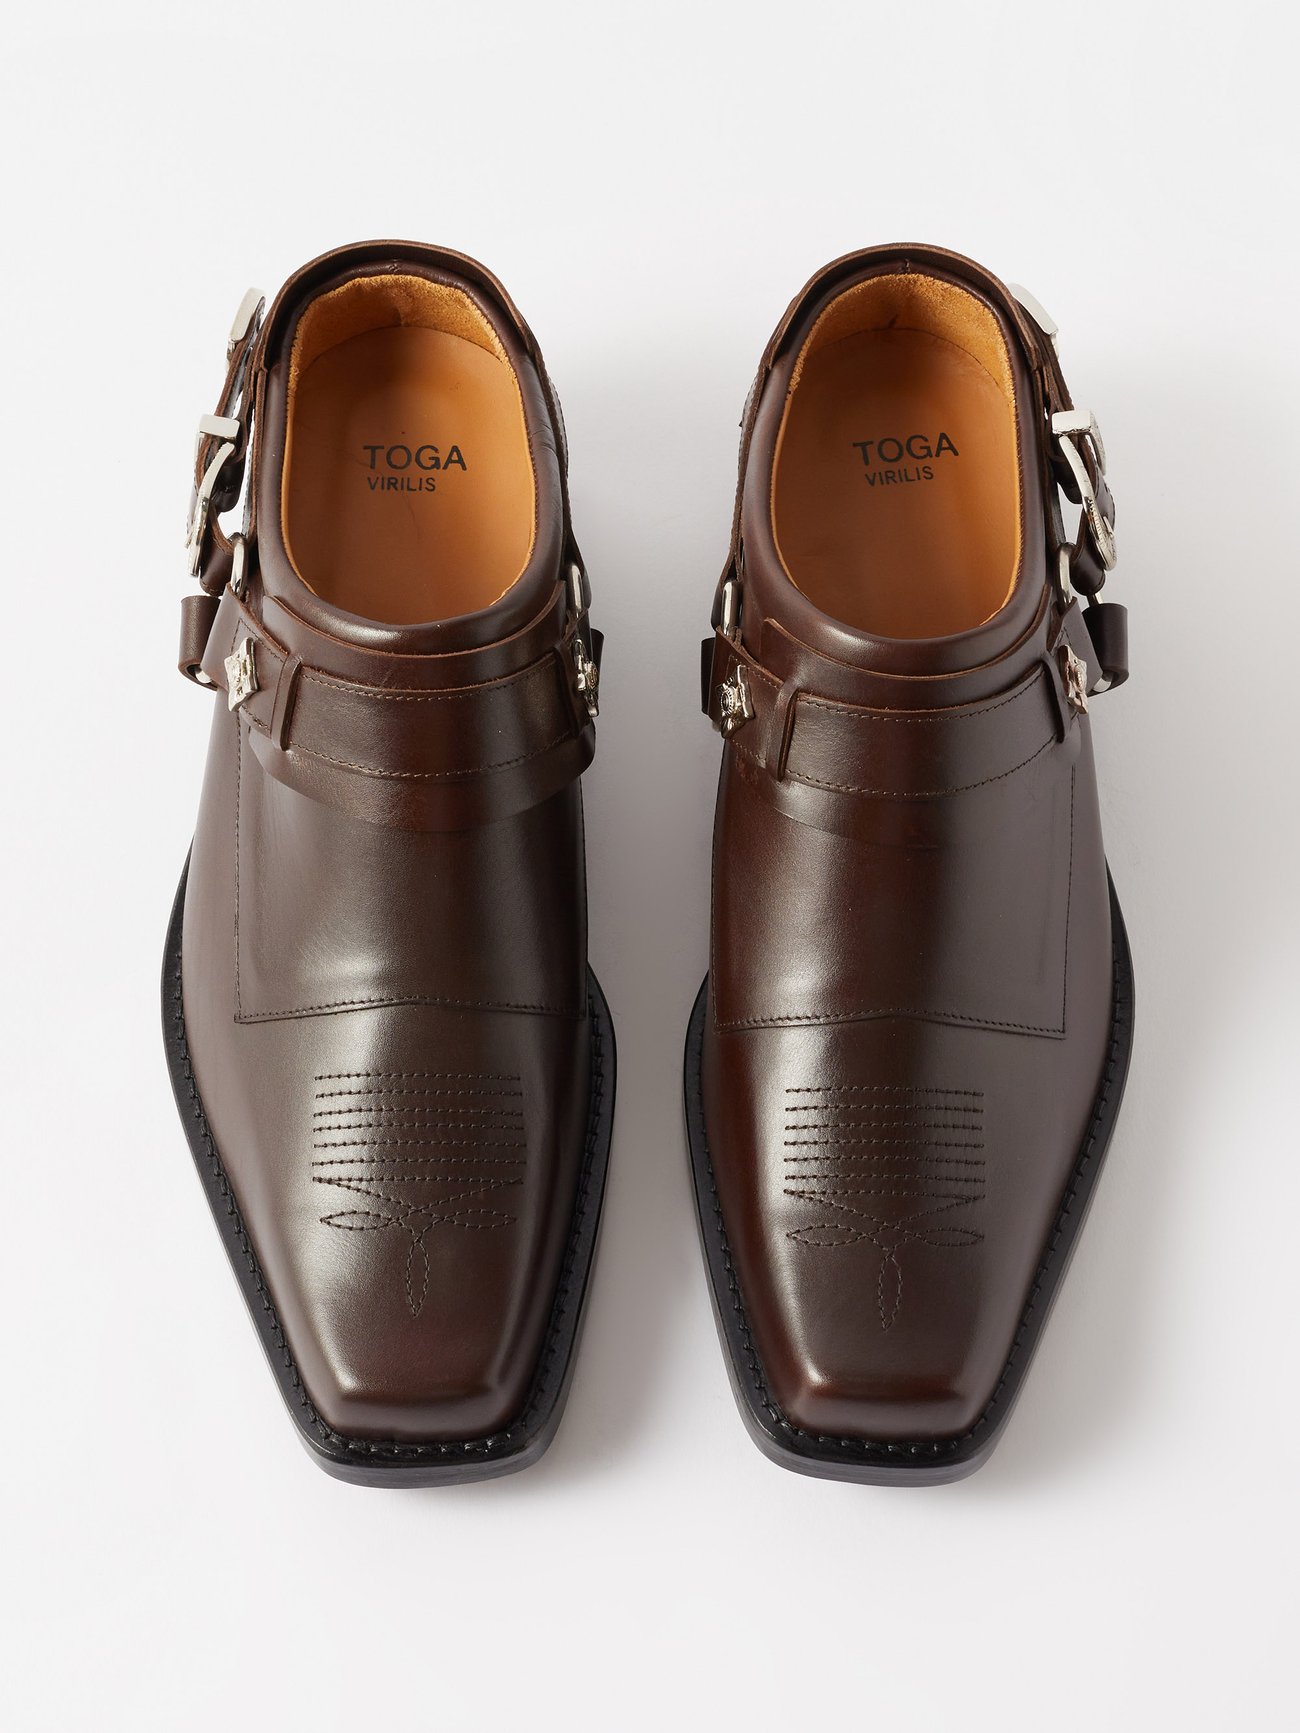 直売公式店 新品 TOGA VIRILIS DOUBLE MONK STRAP SHOES - 靴